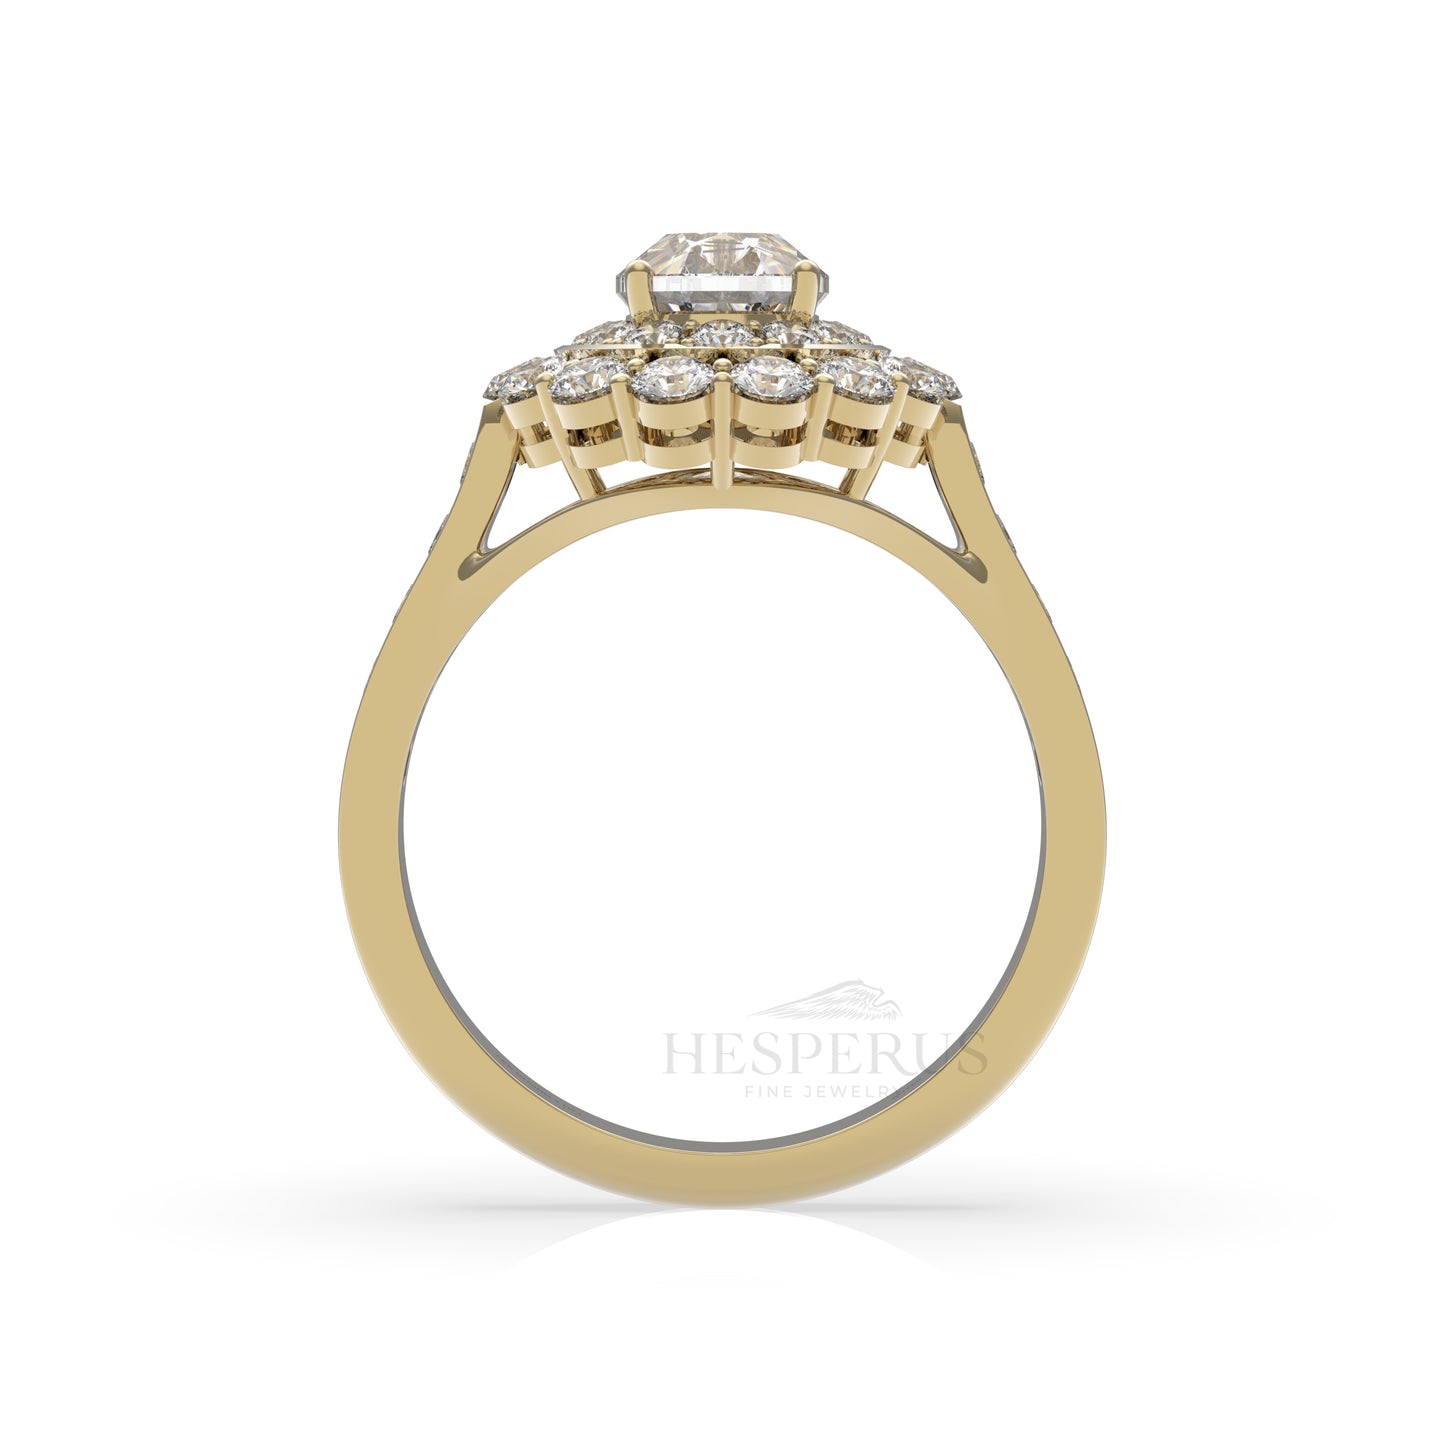 Double Halo Ring-Hesperus Fine Jewelry